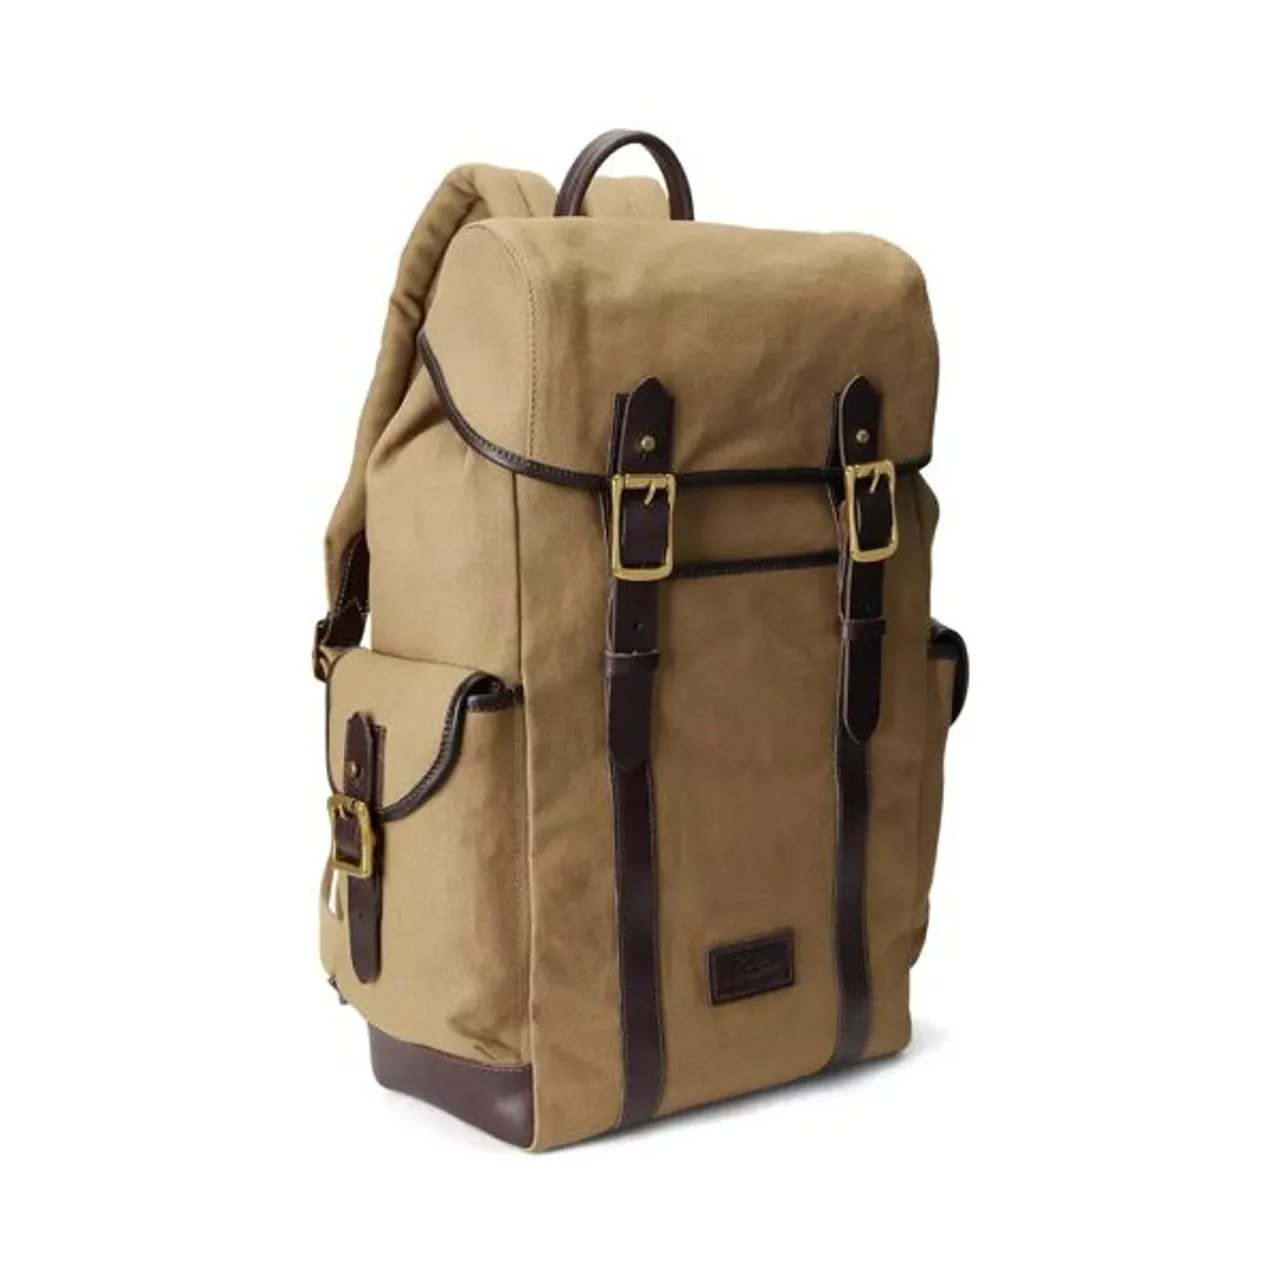 Ralph Lauren Pebbled Leather Backpack - Tan/Dark Brown - Unisex